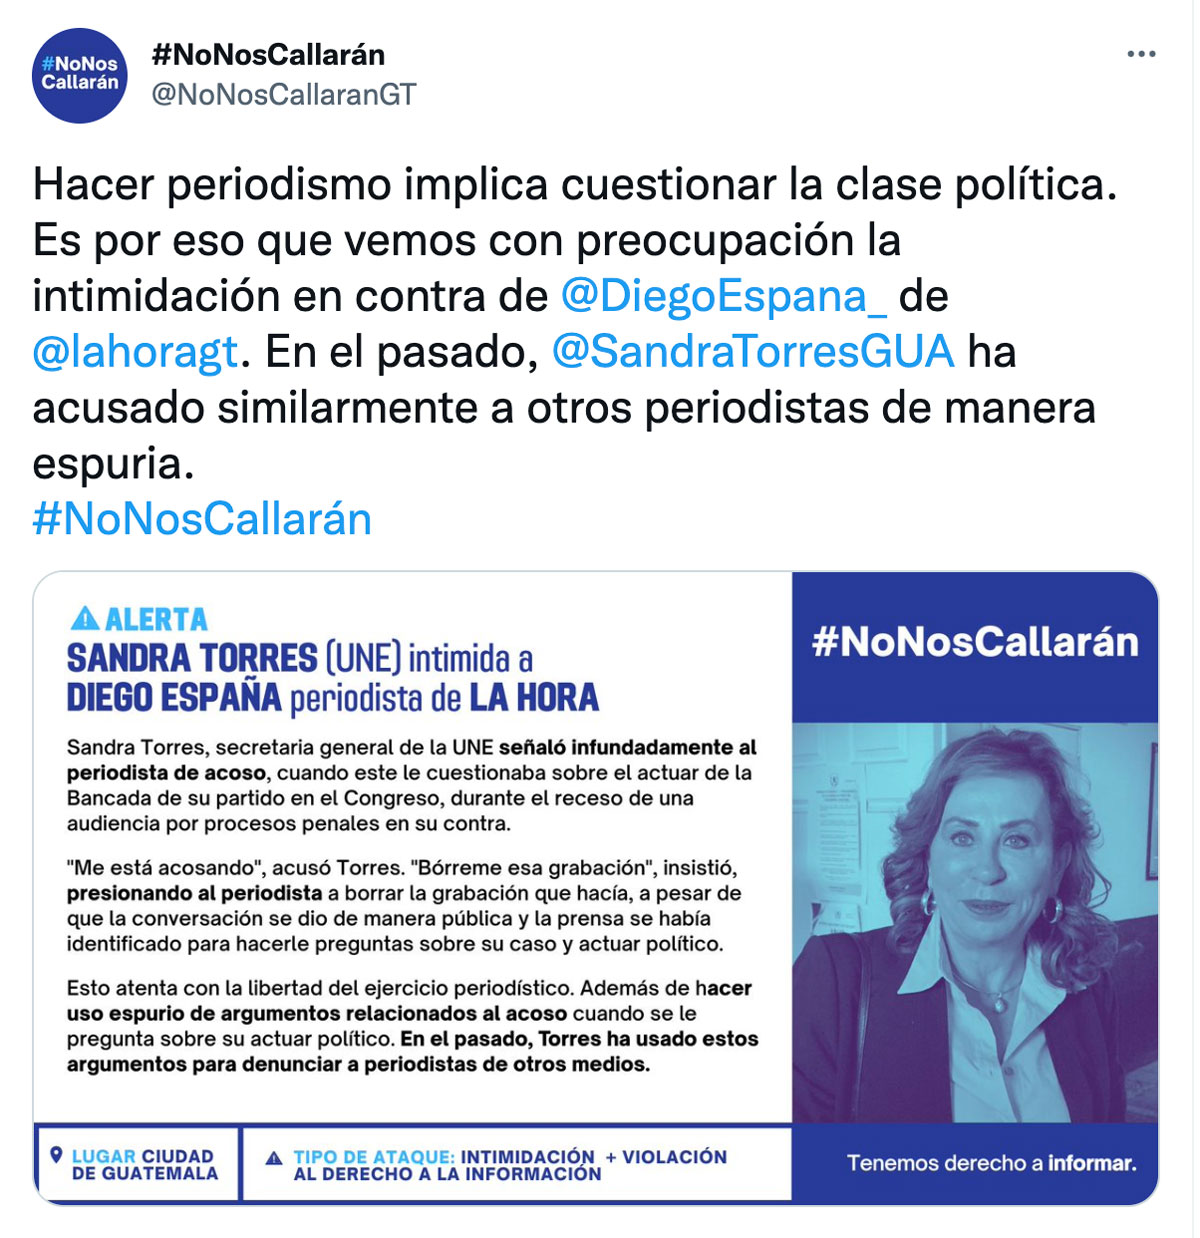 Torres intimida a periodista de La Hora